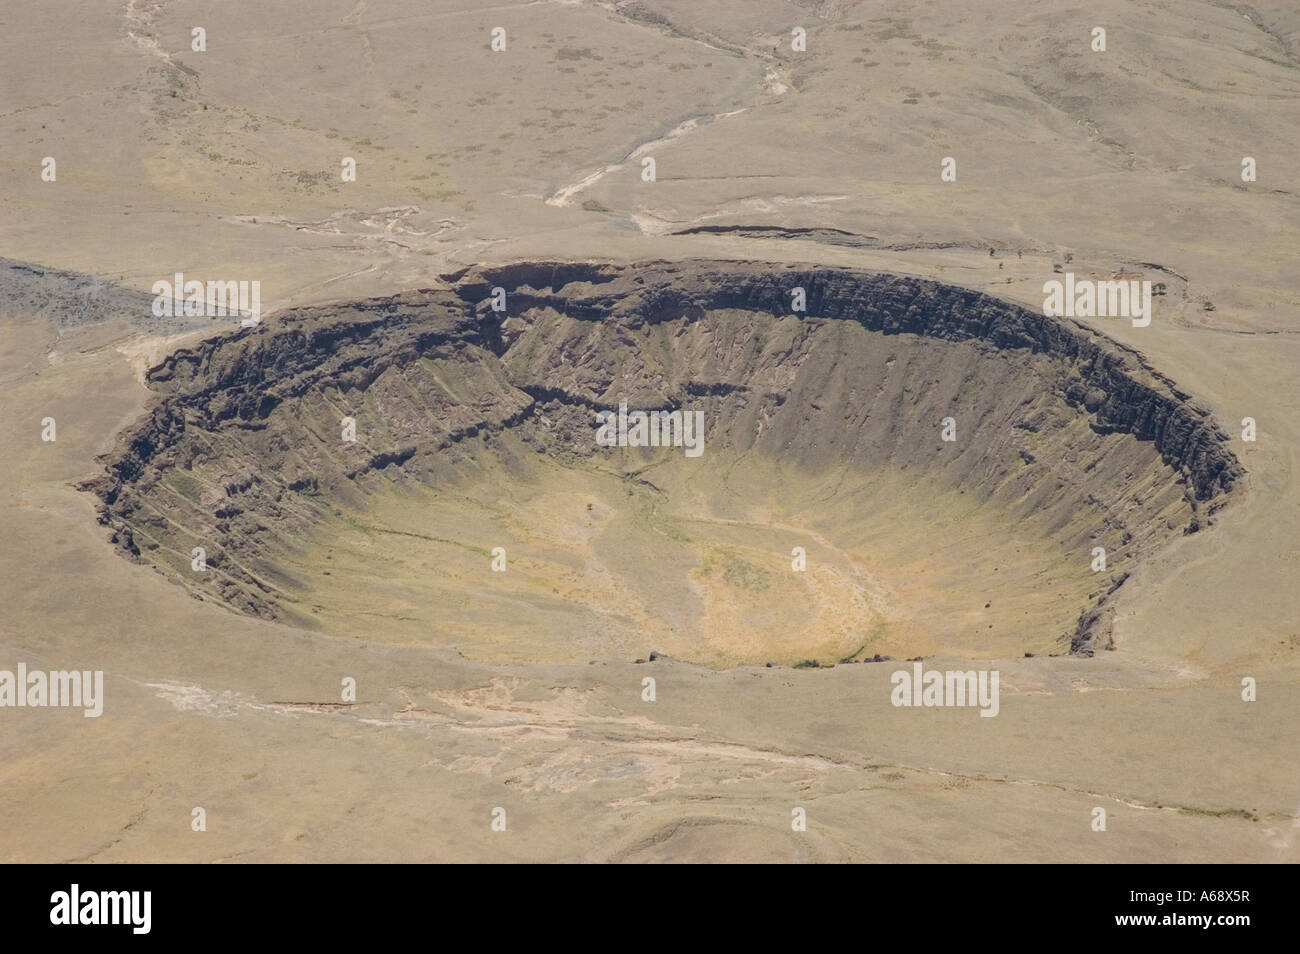 Vista aérea de un colapso (parásito) cráter volcánico en la base de Ol Donyo Lengai, Tanzania Foto de stock